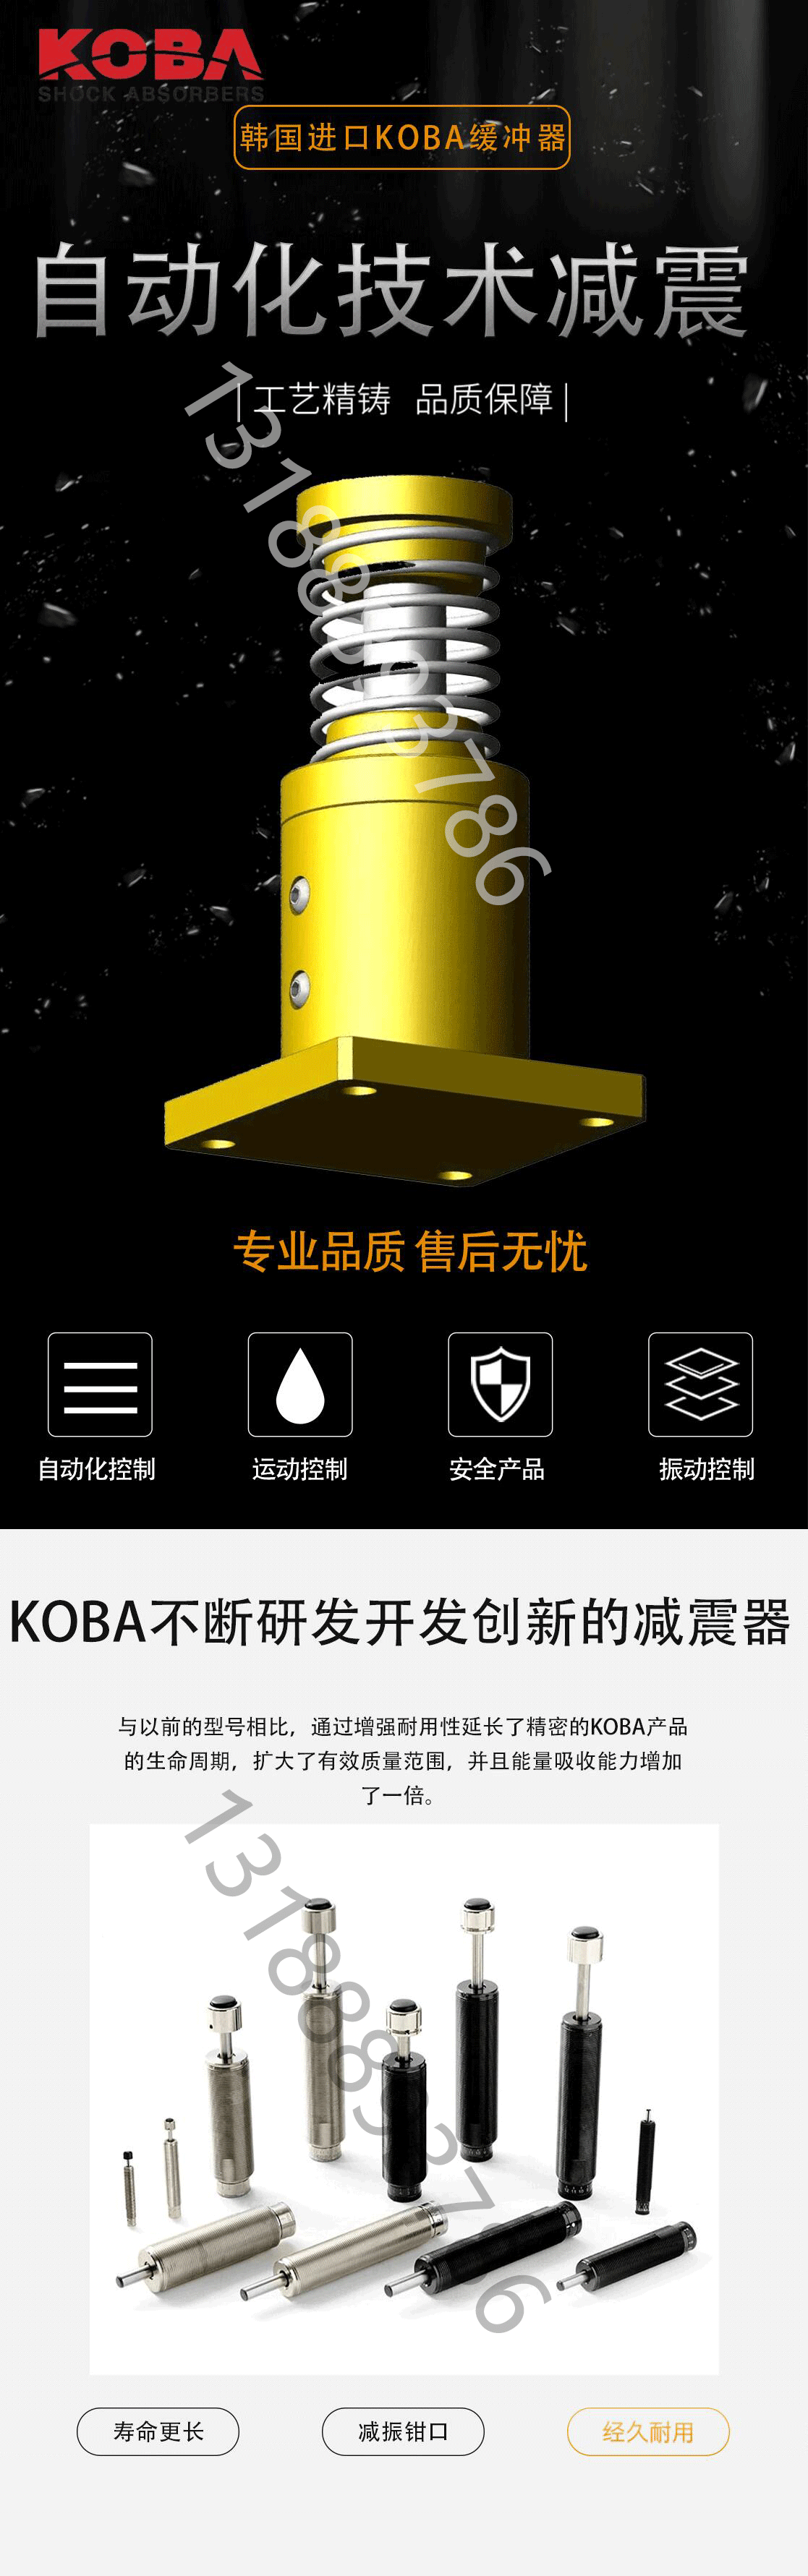 KOBA缓冲器的主要特点有哪些？